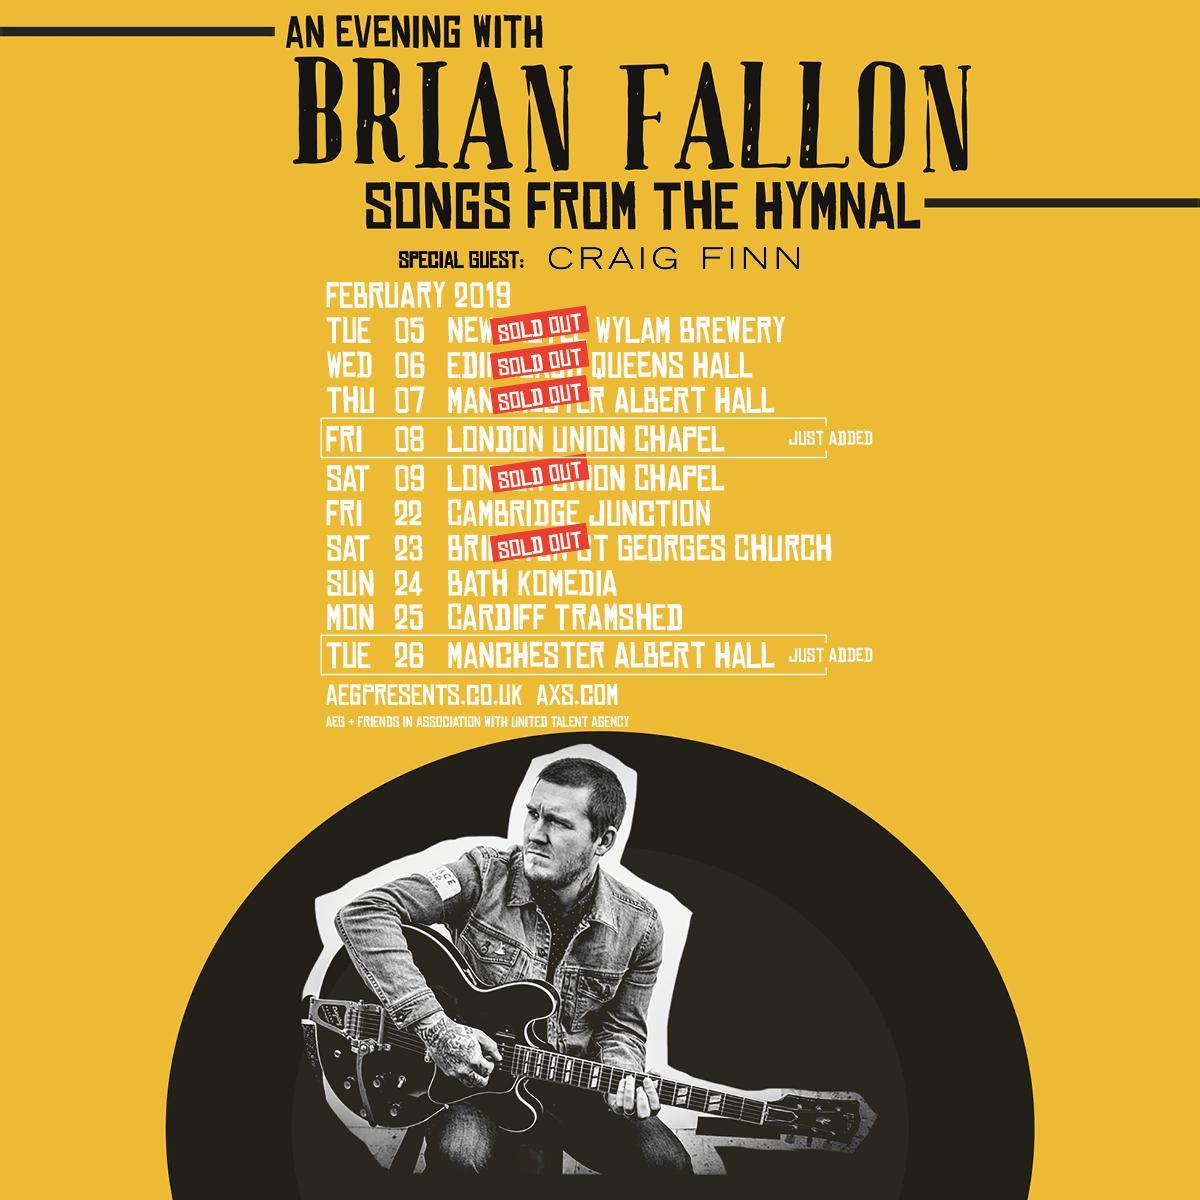 Brian Fallon announces further UK acoustic tour dates for 2019